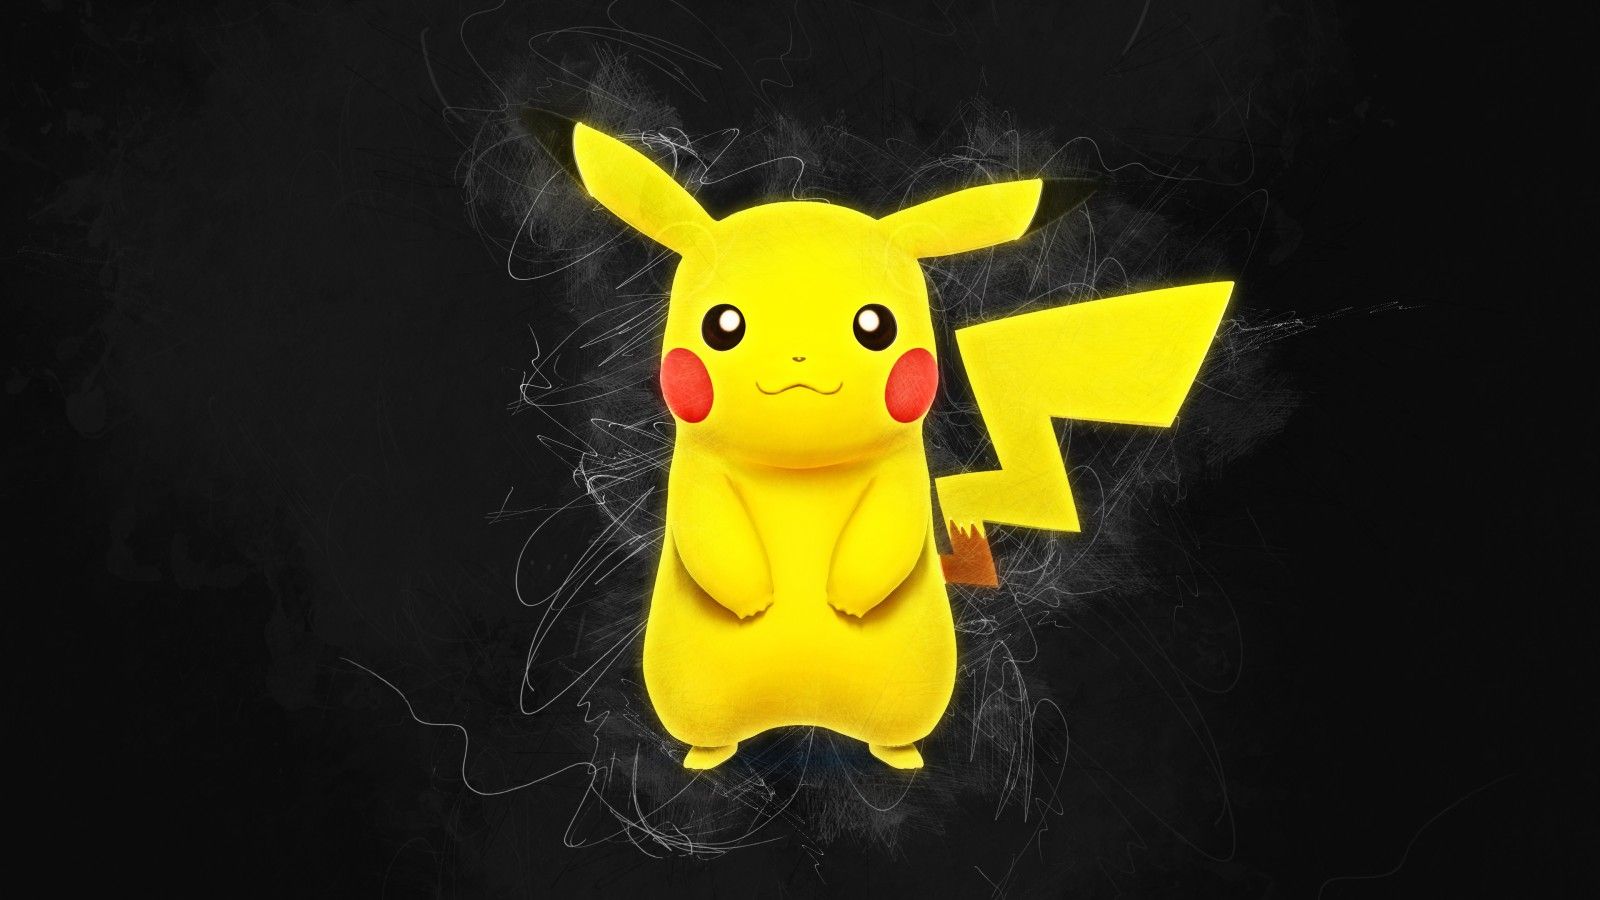 Wallpaper Pikachu, Pokémon, 4K, Black Dark,. Wallpaper For IPhone, Android, Mobile And Desktop